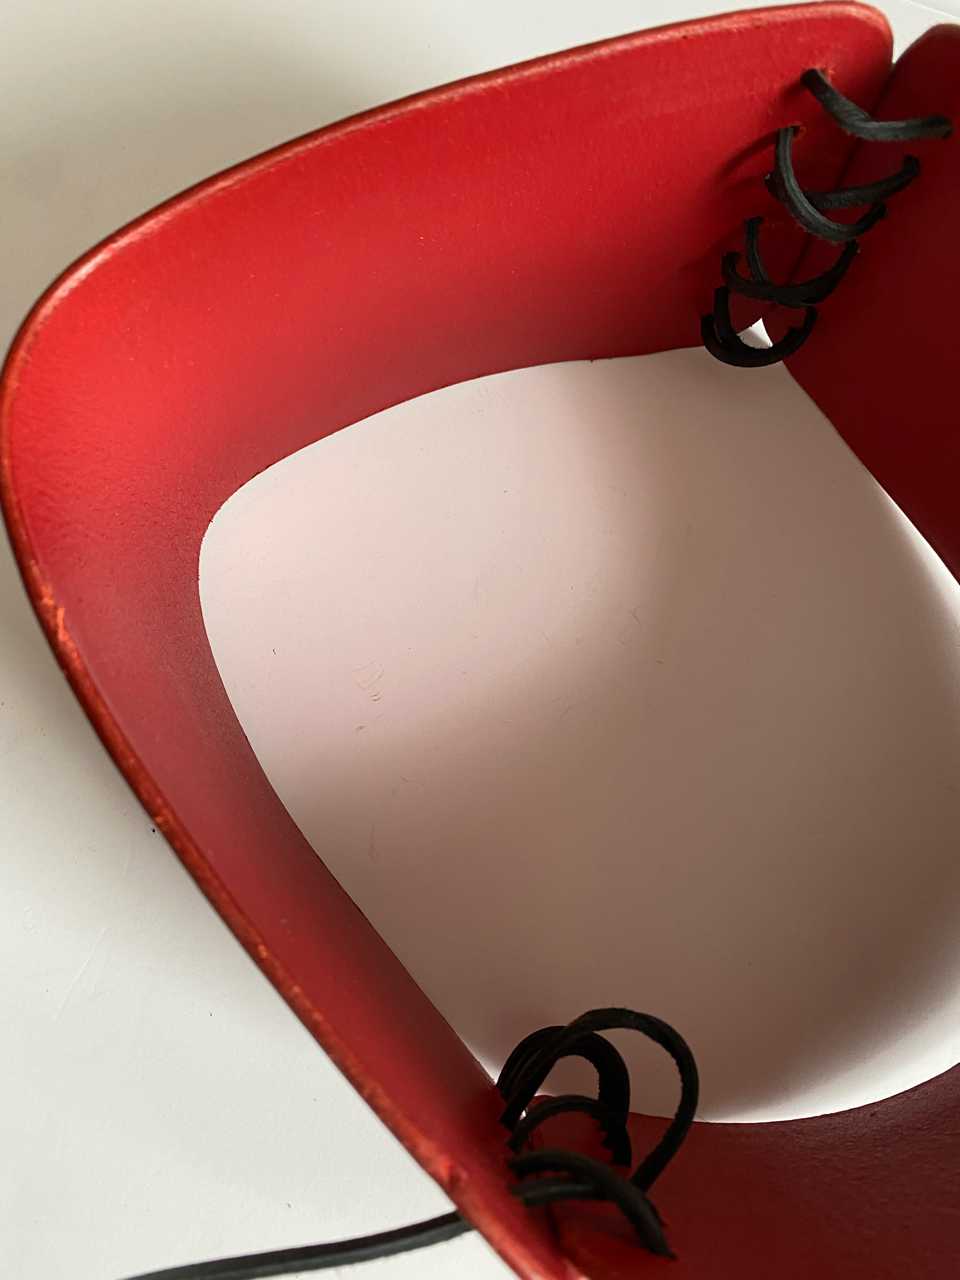 Red vegetable-tan Leather Corset Belt- Handmade by Me Cherchez La Femme brand